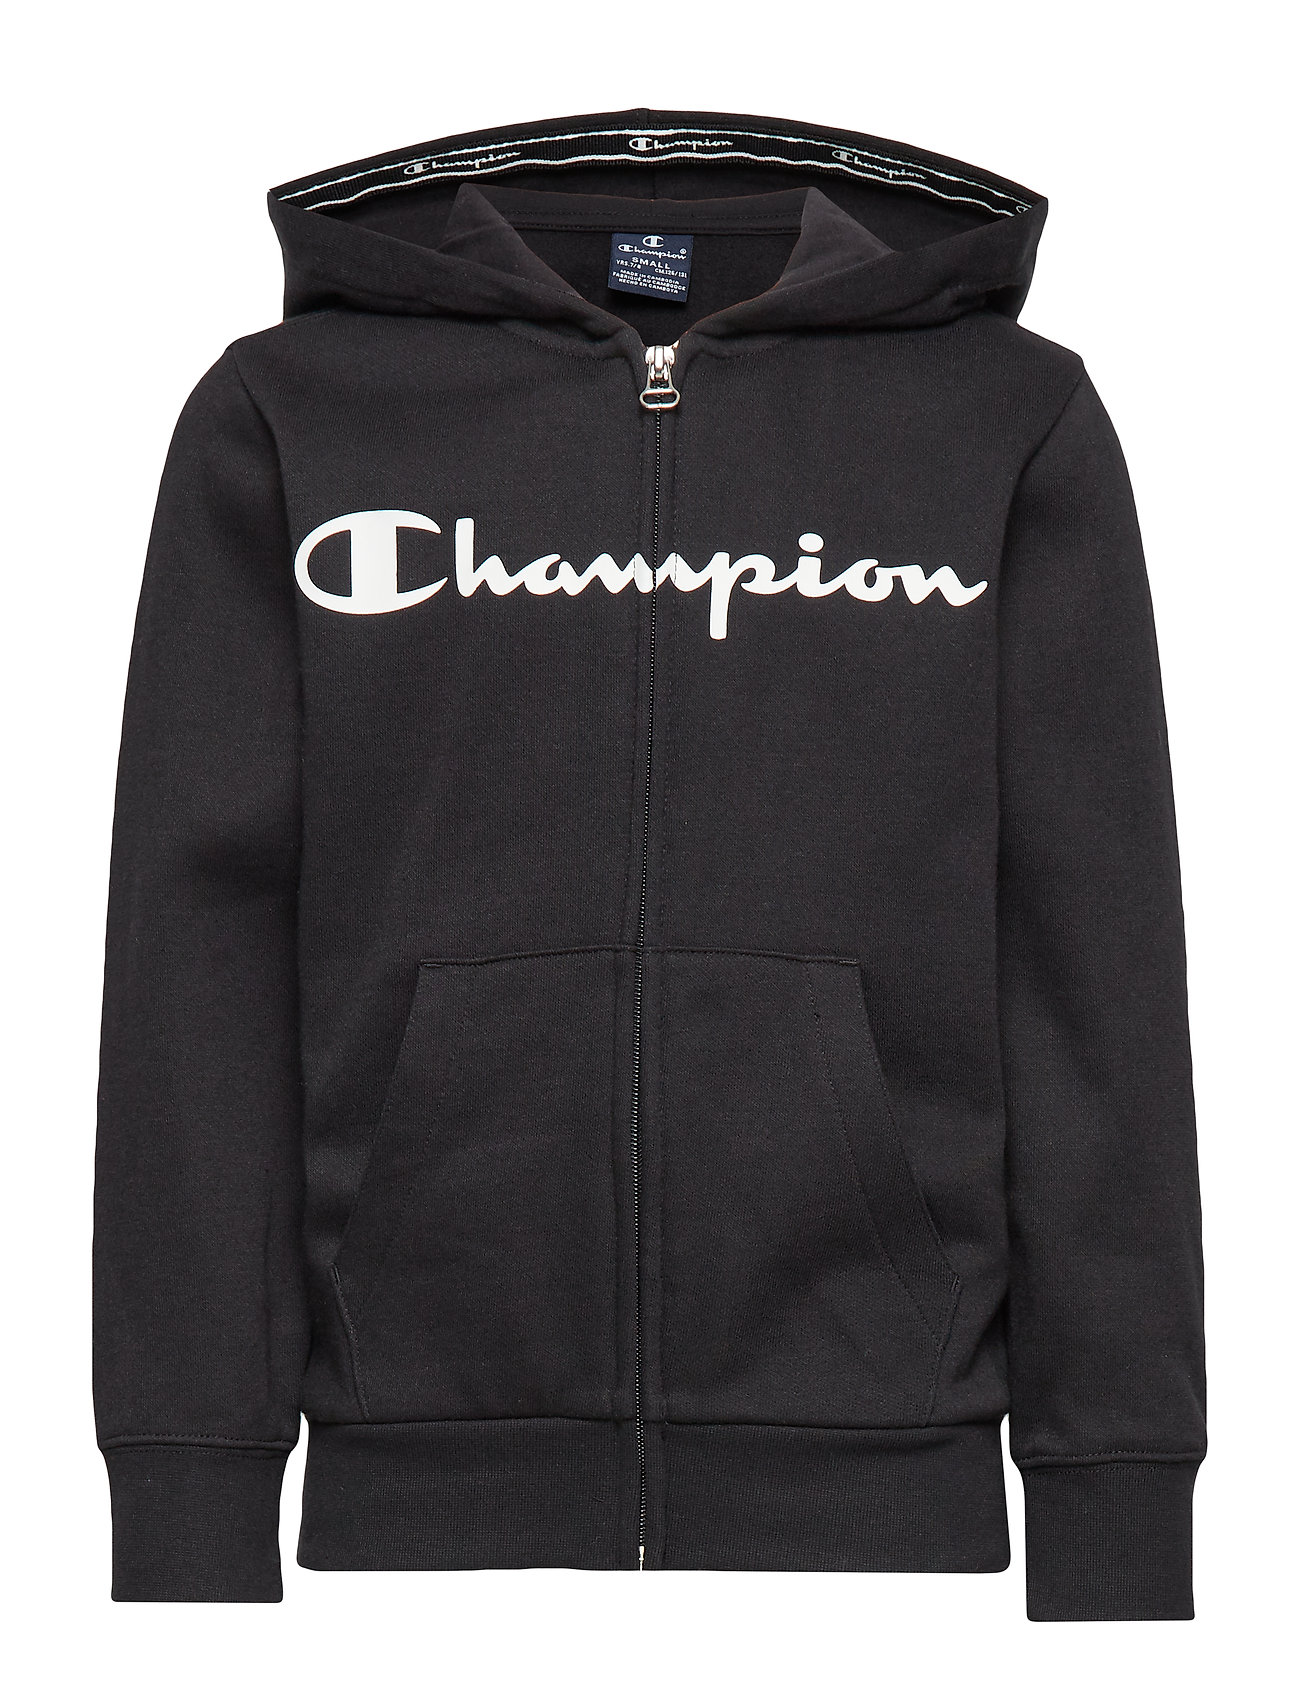 black champion zip up hoodie